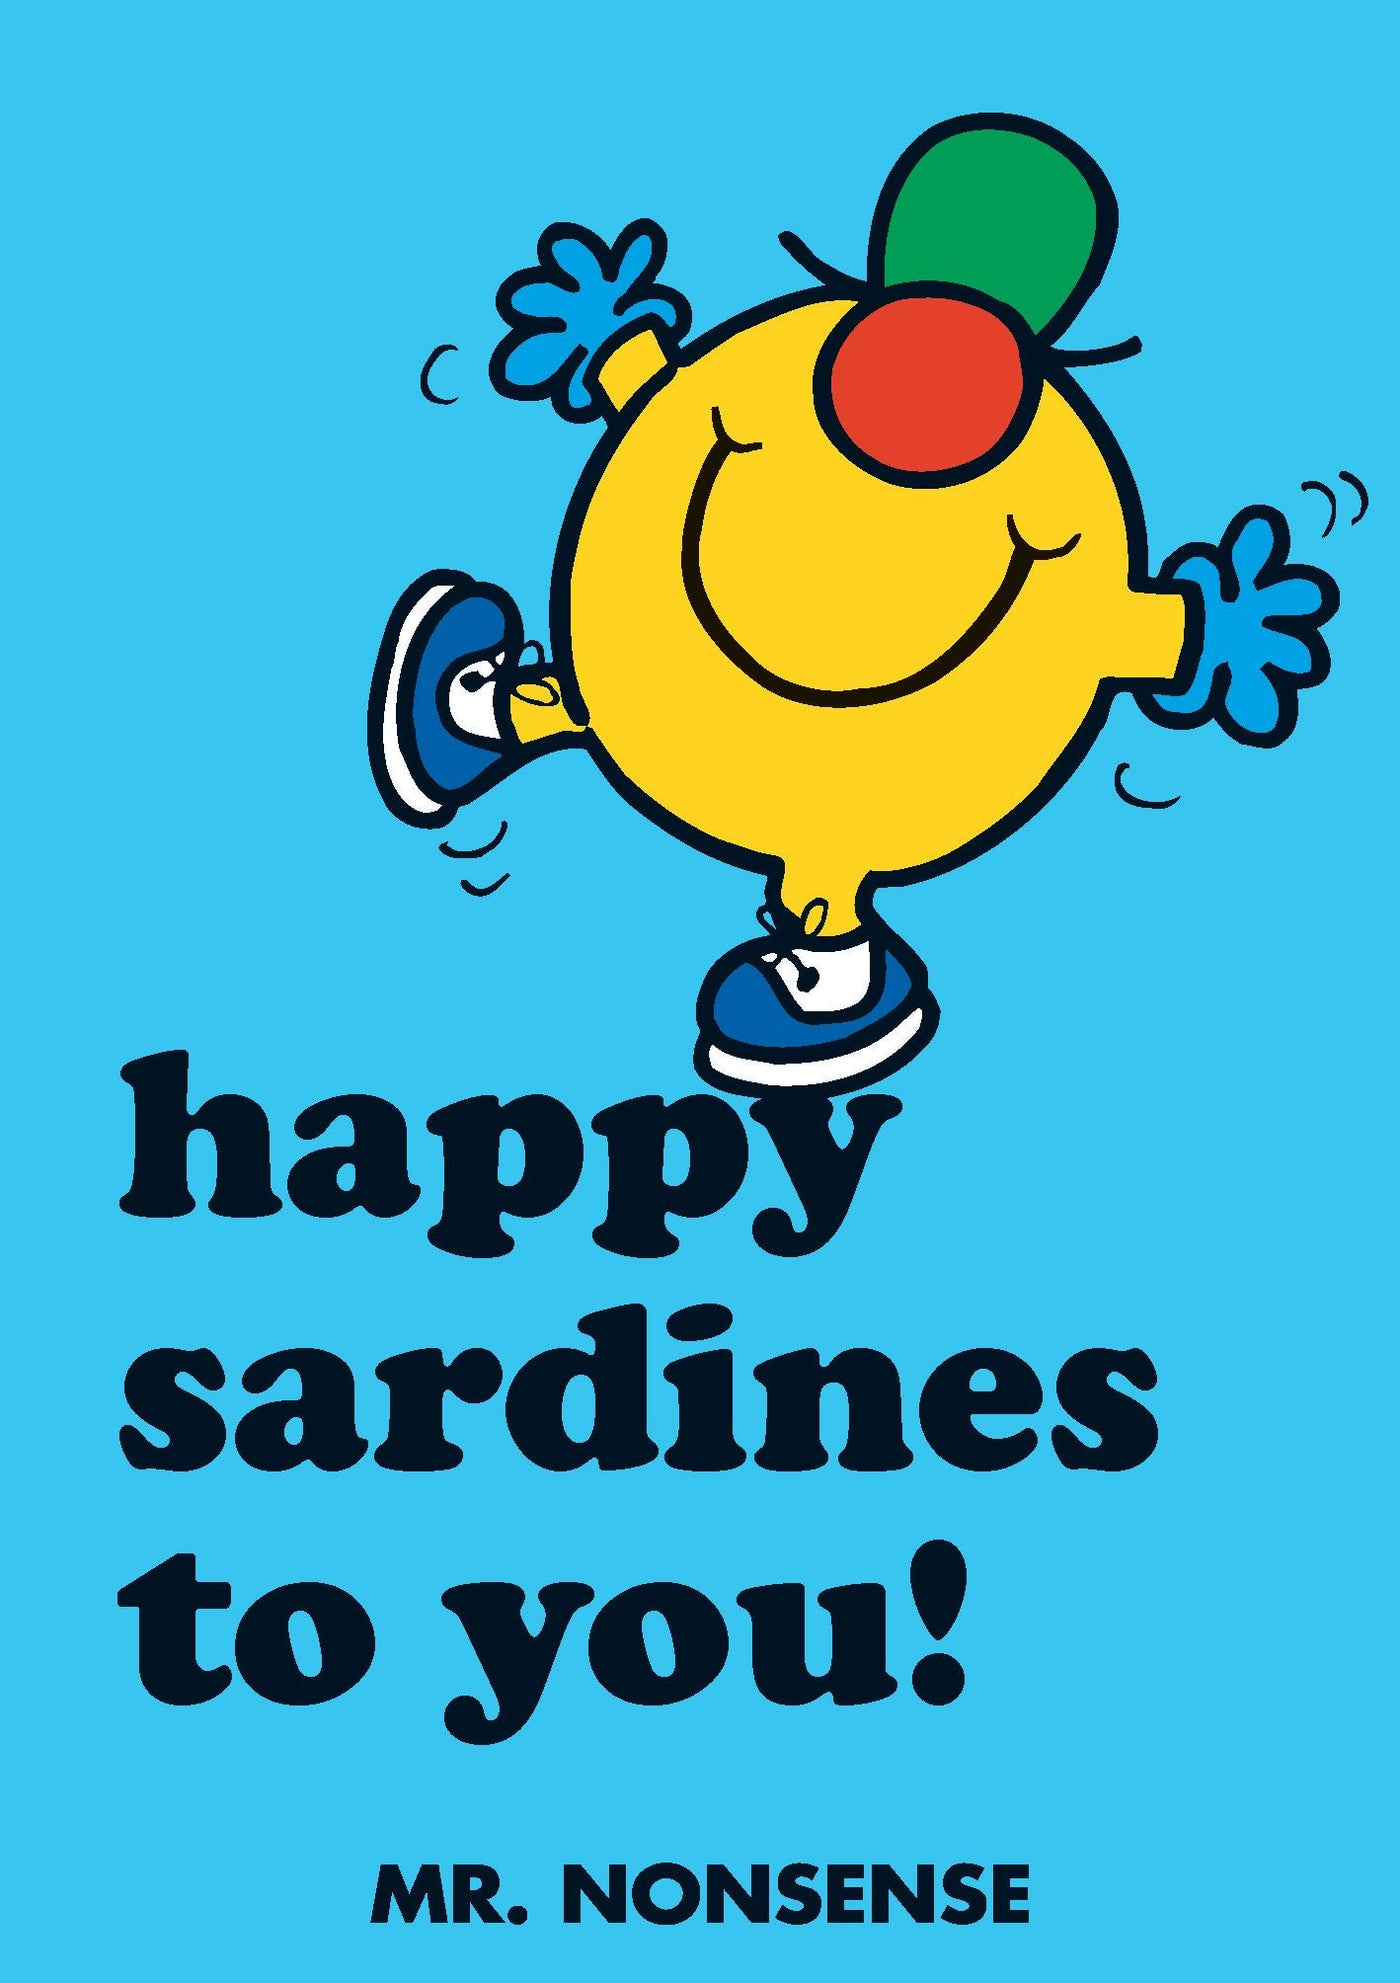 Mr Nonsense Happy Sardines 'Birthday' Greetings Card.